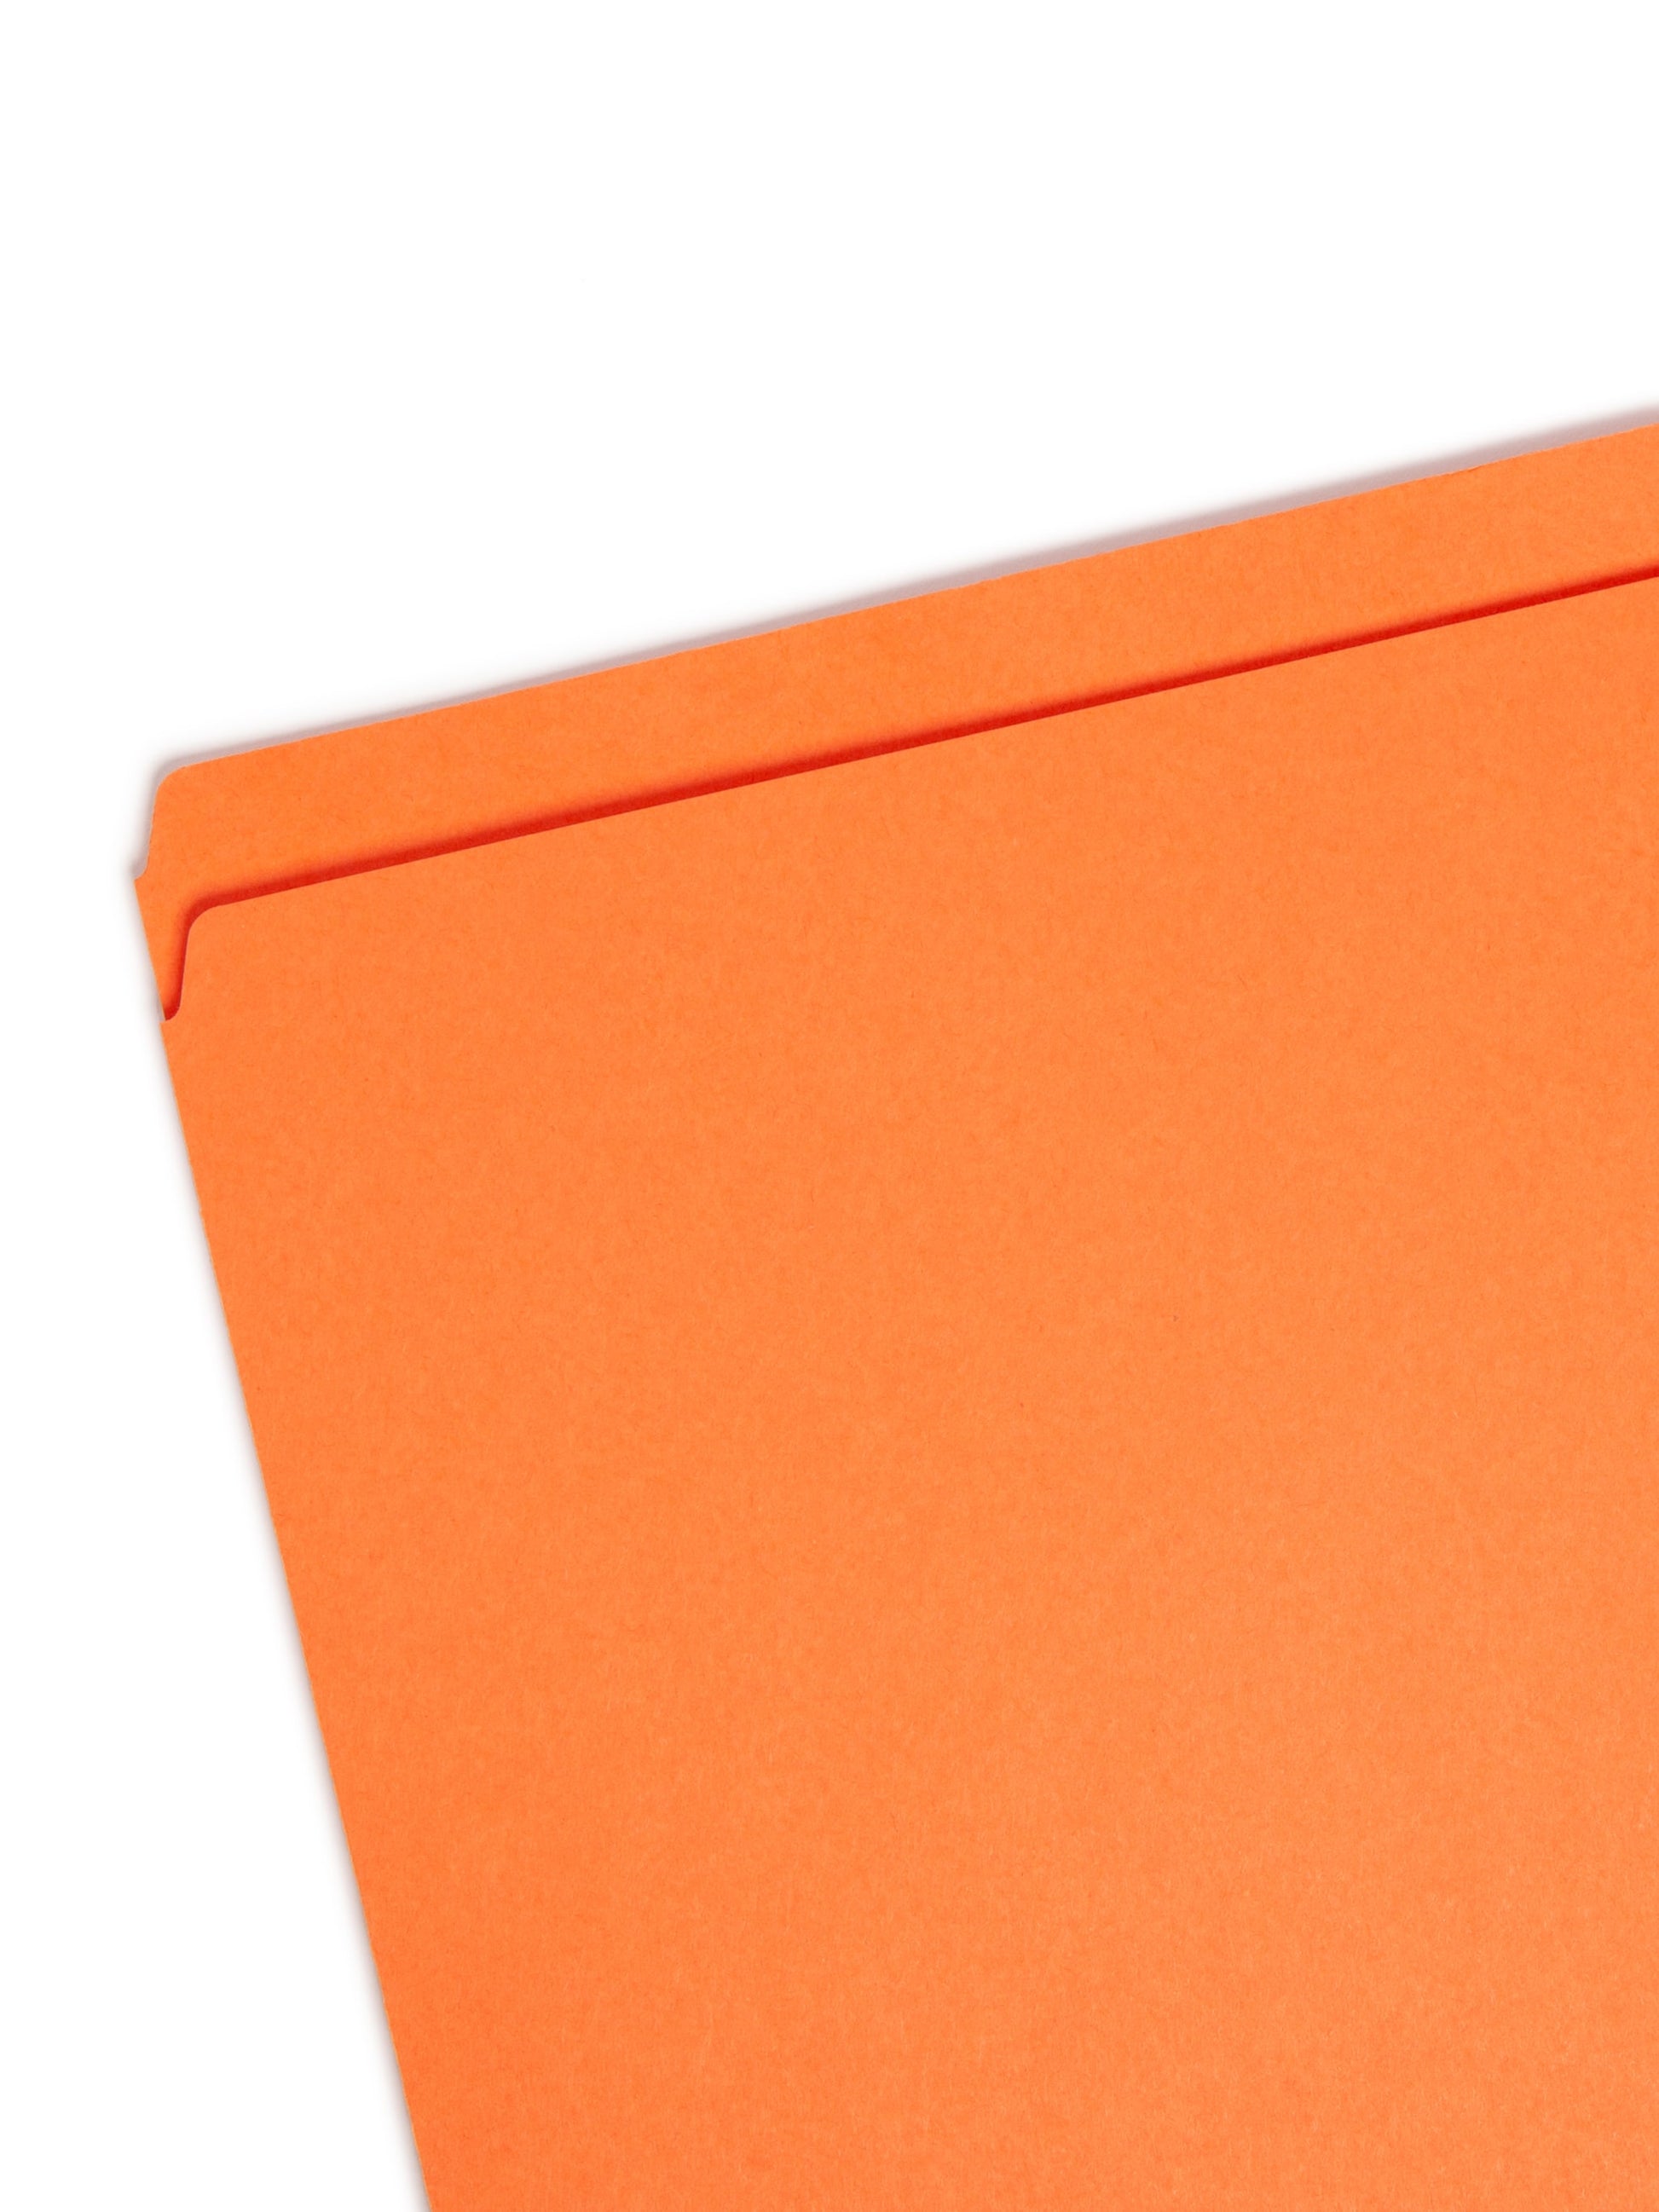 Standard File Folders, Straight-Cut Tab, Orange Color, Letter Size, Set of 100, 086486109413